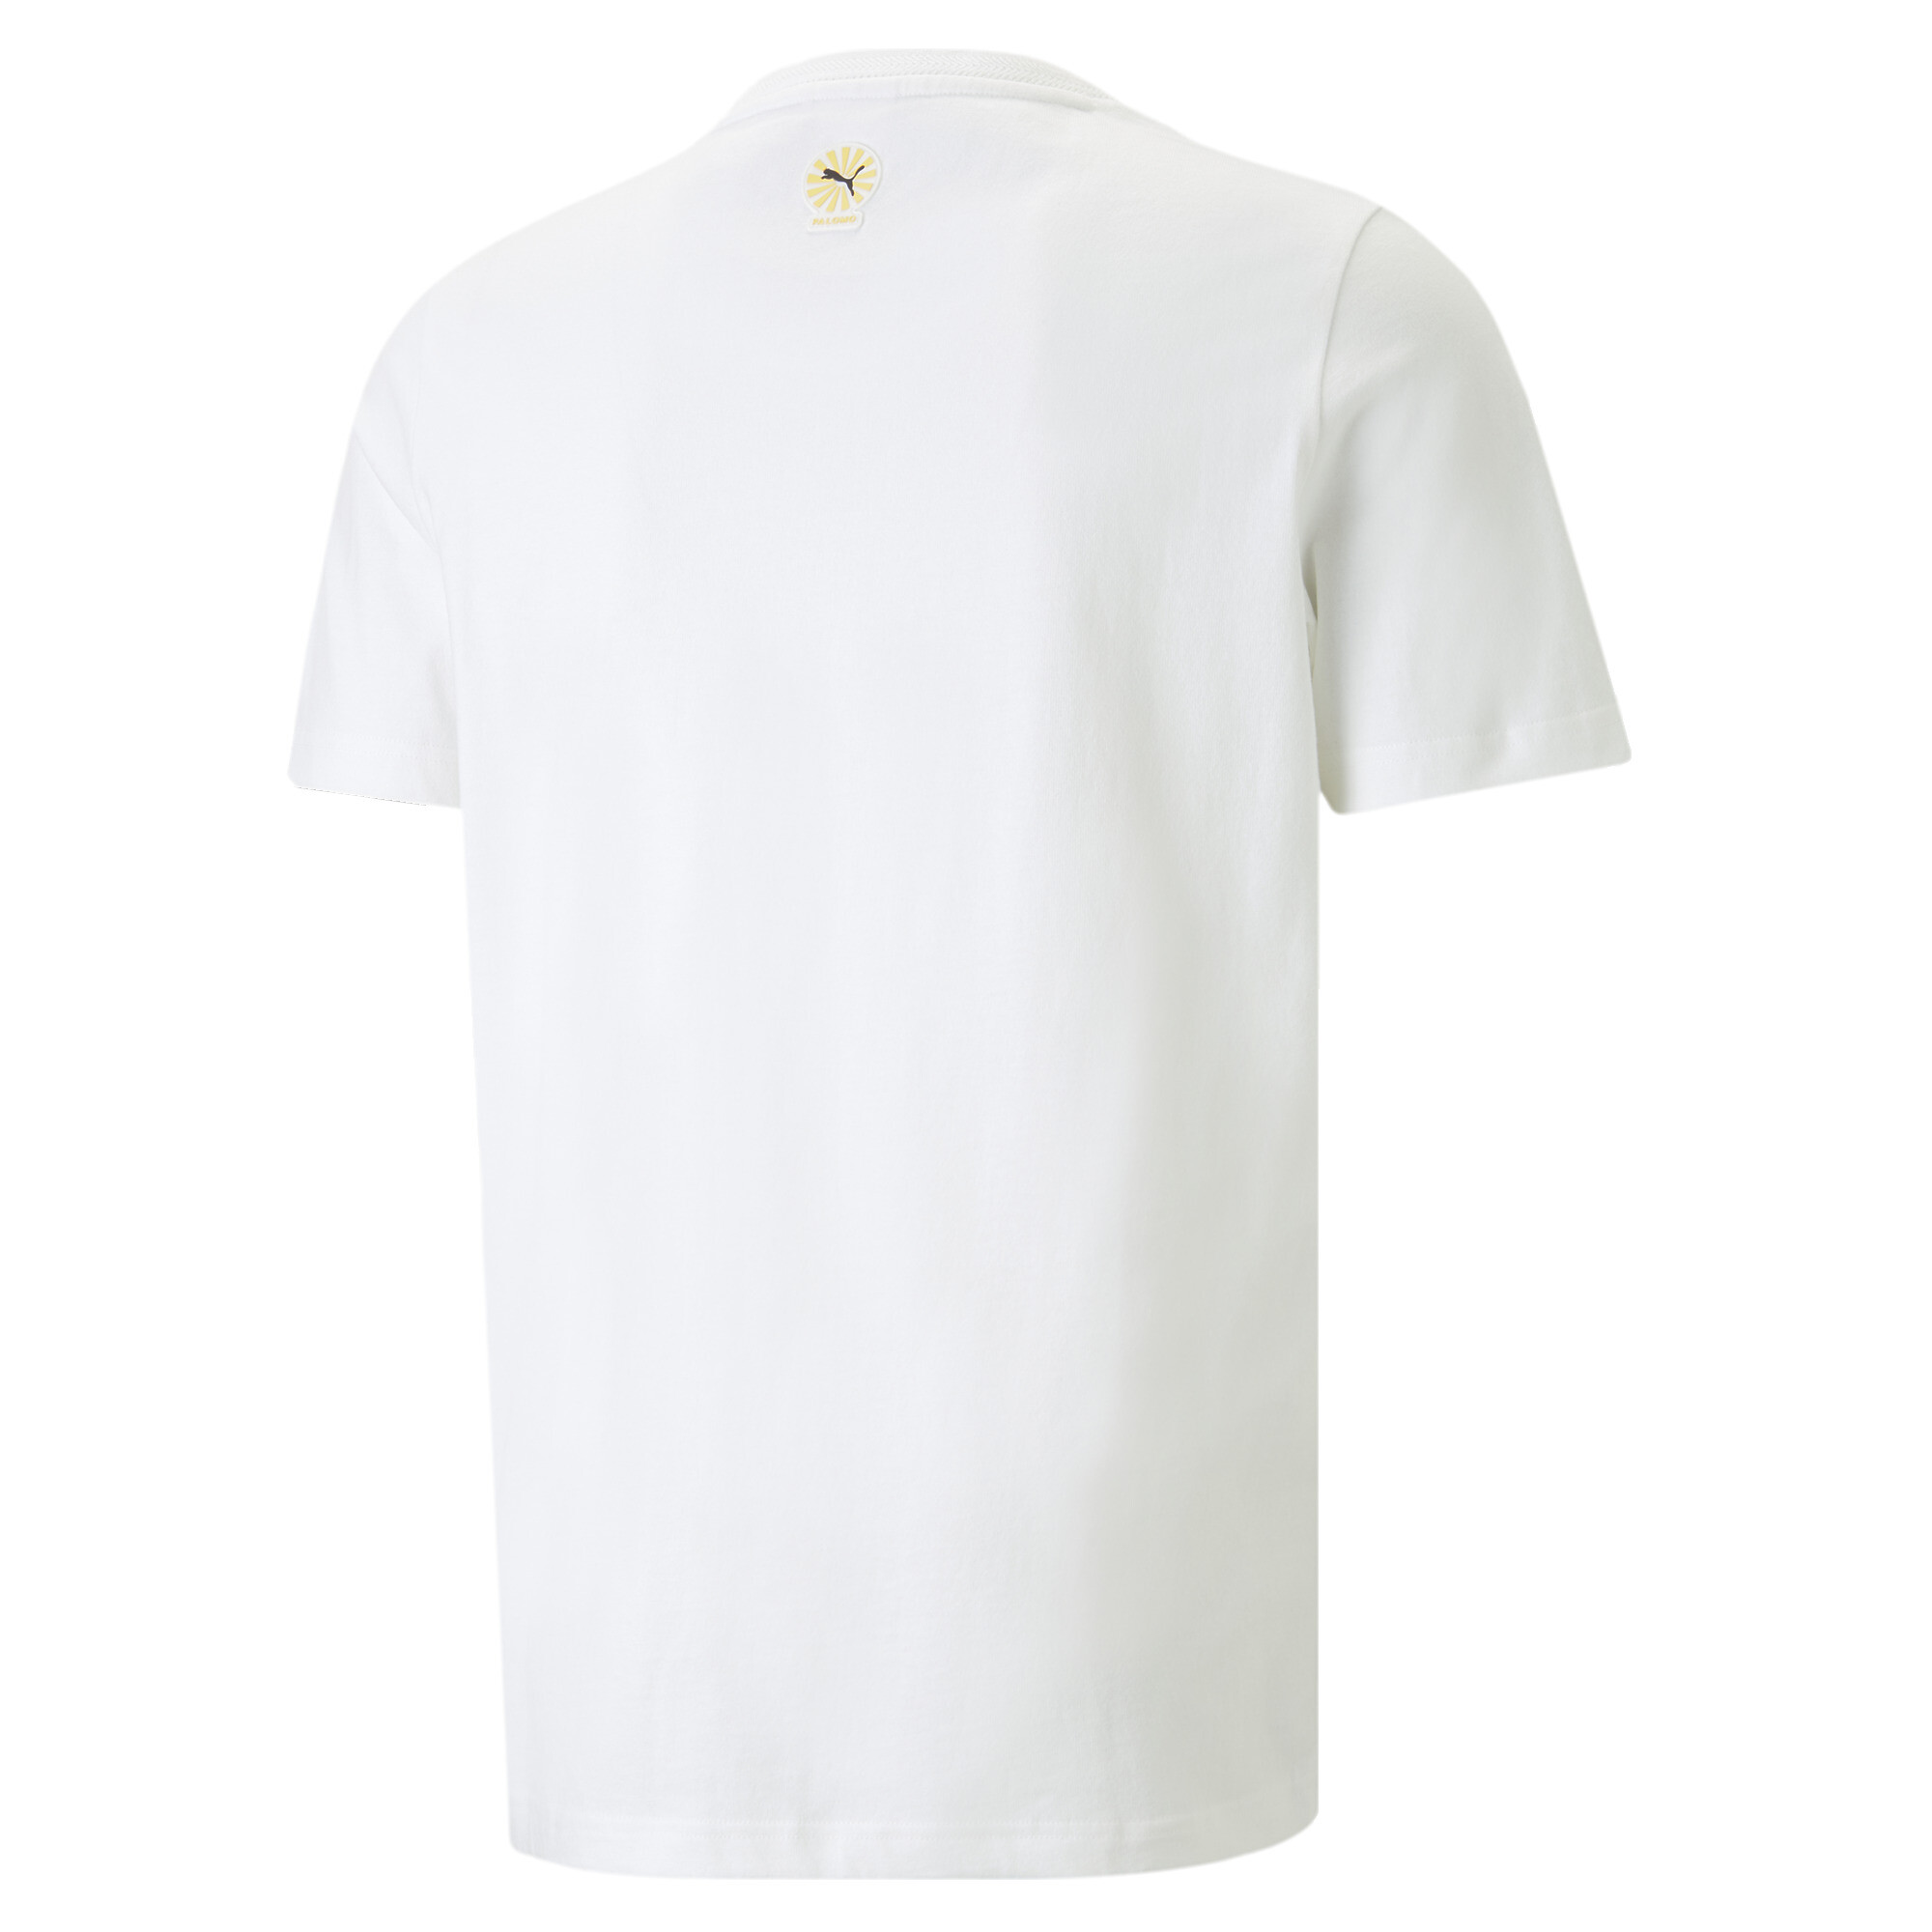 Men's PUMA X PALOMO Graphic T-Shirt In 20 - White, Size Large